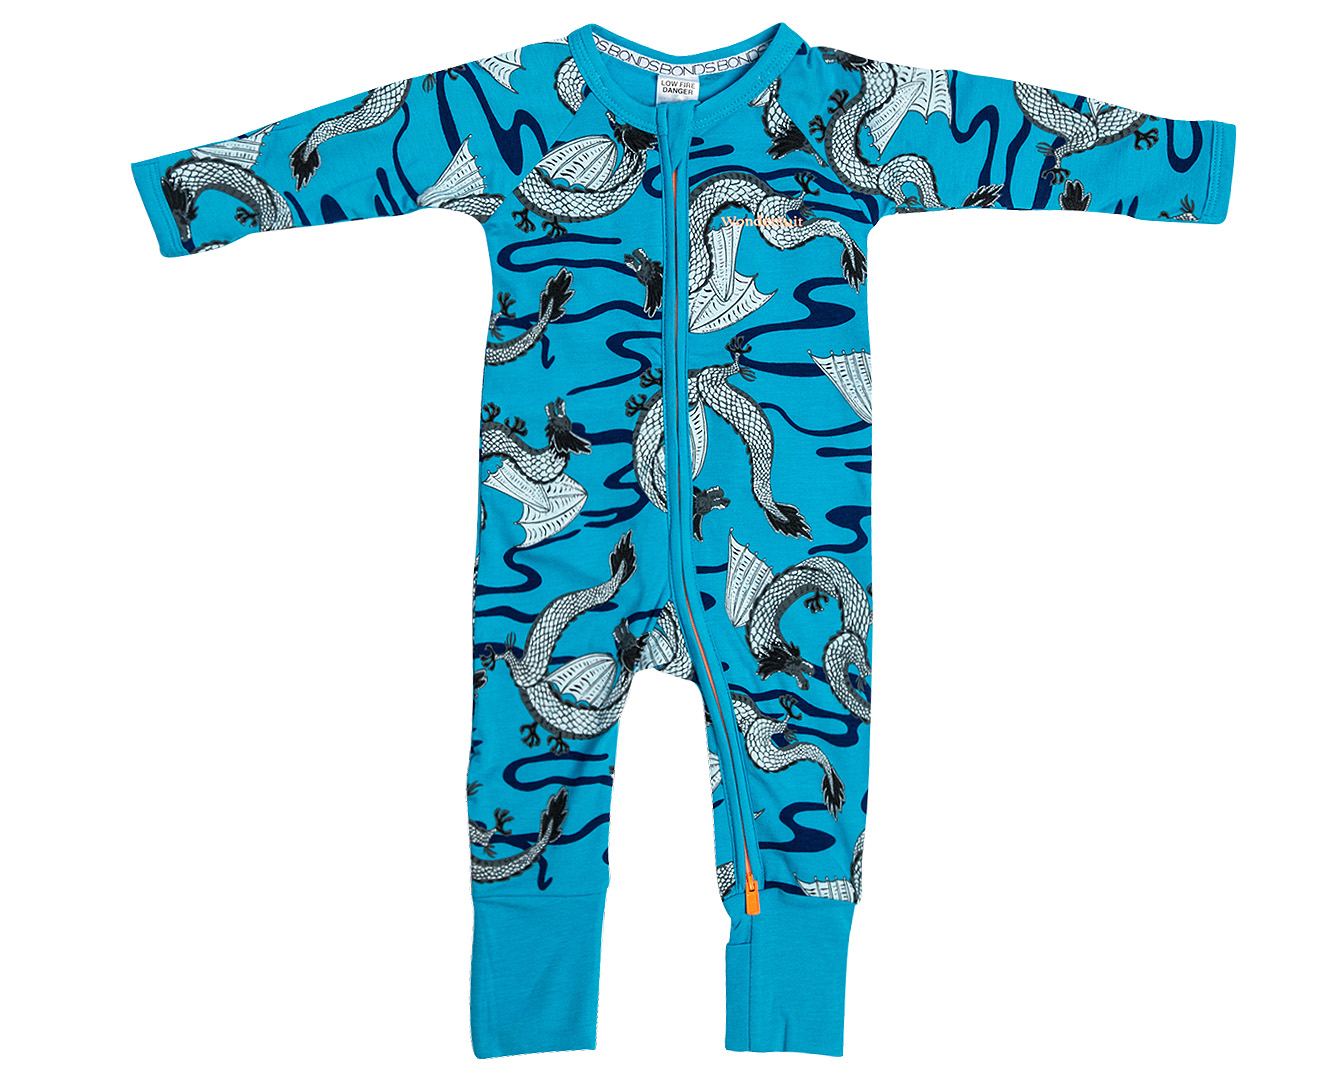 Bonds Baby Dragon Print Zip Wondersuit - Blue/Black/White | Mumgo.com.au